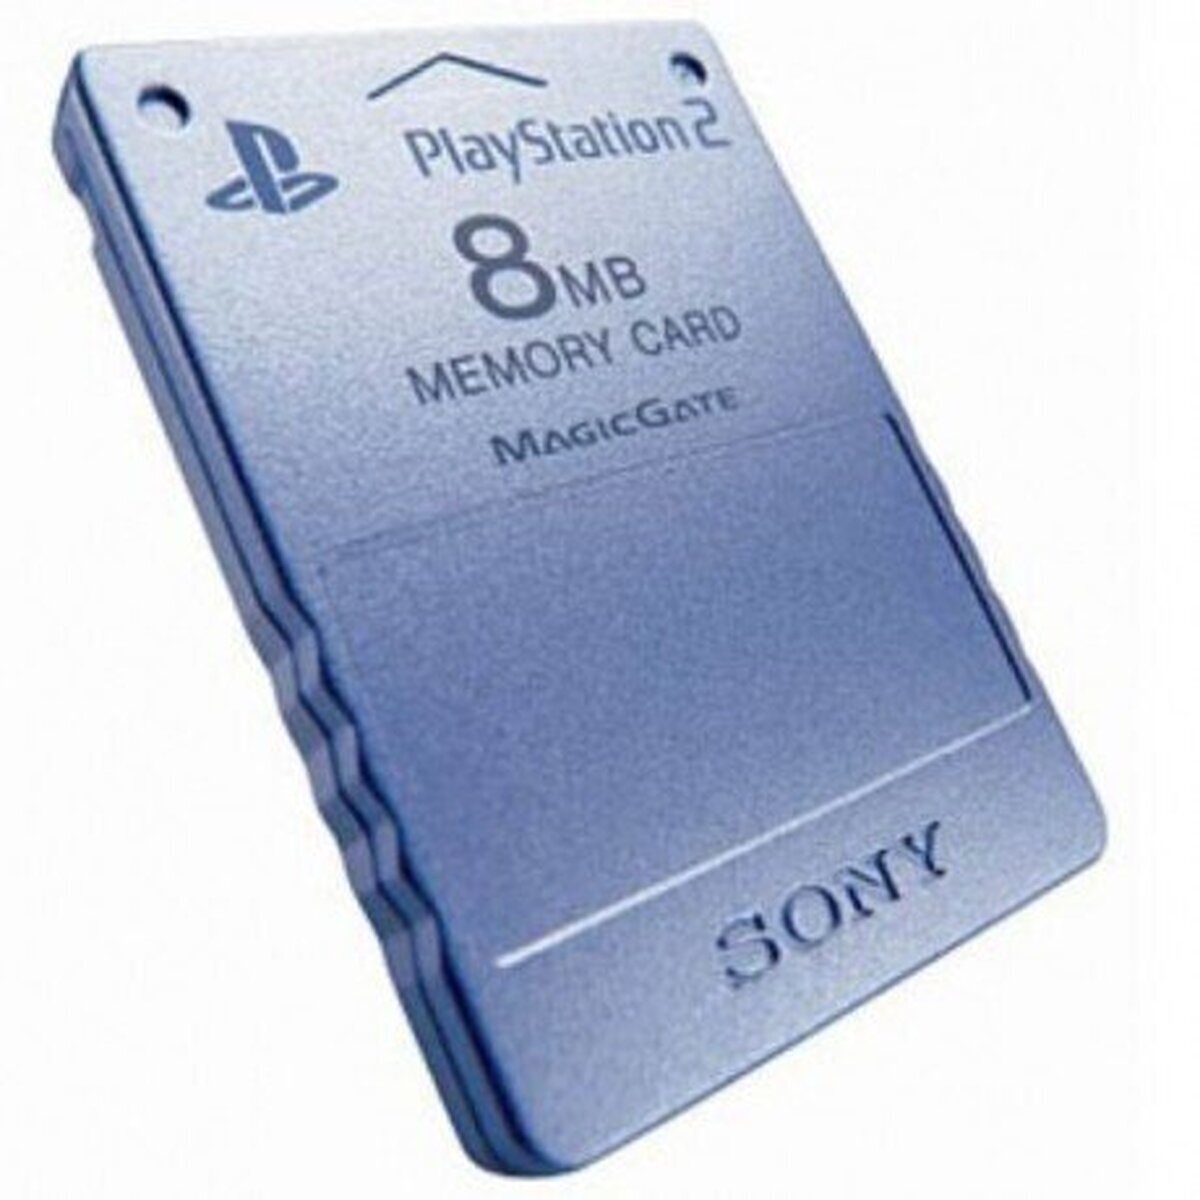 8 MB - Suficientes para tener guardada toda tu infancia